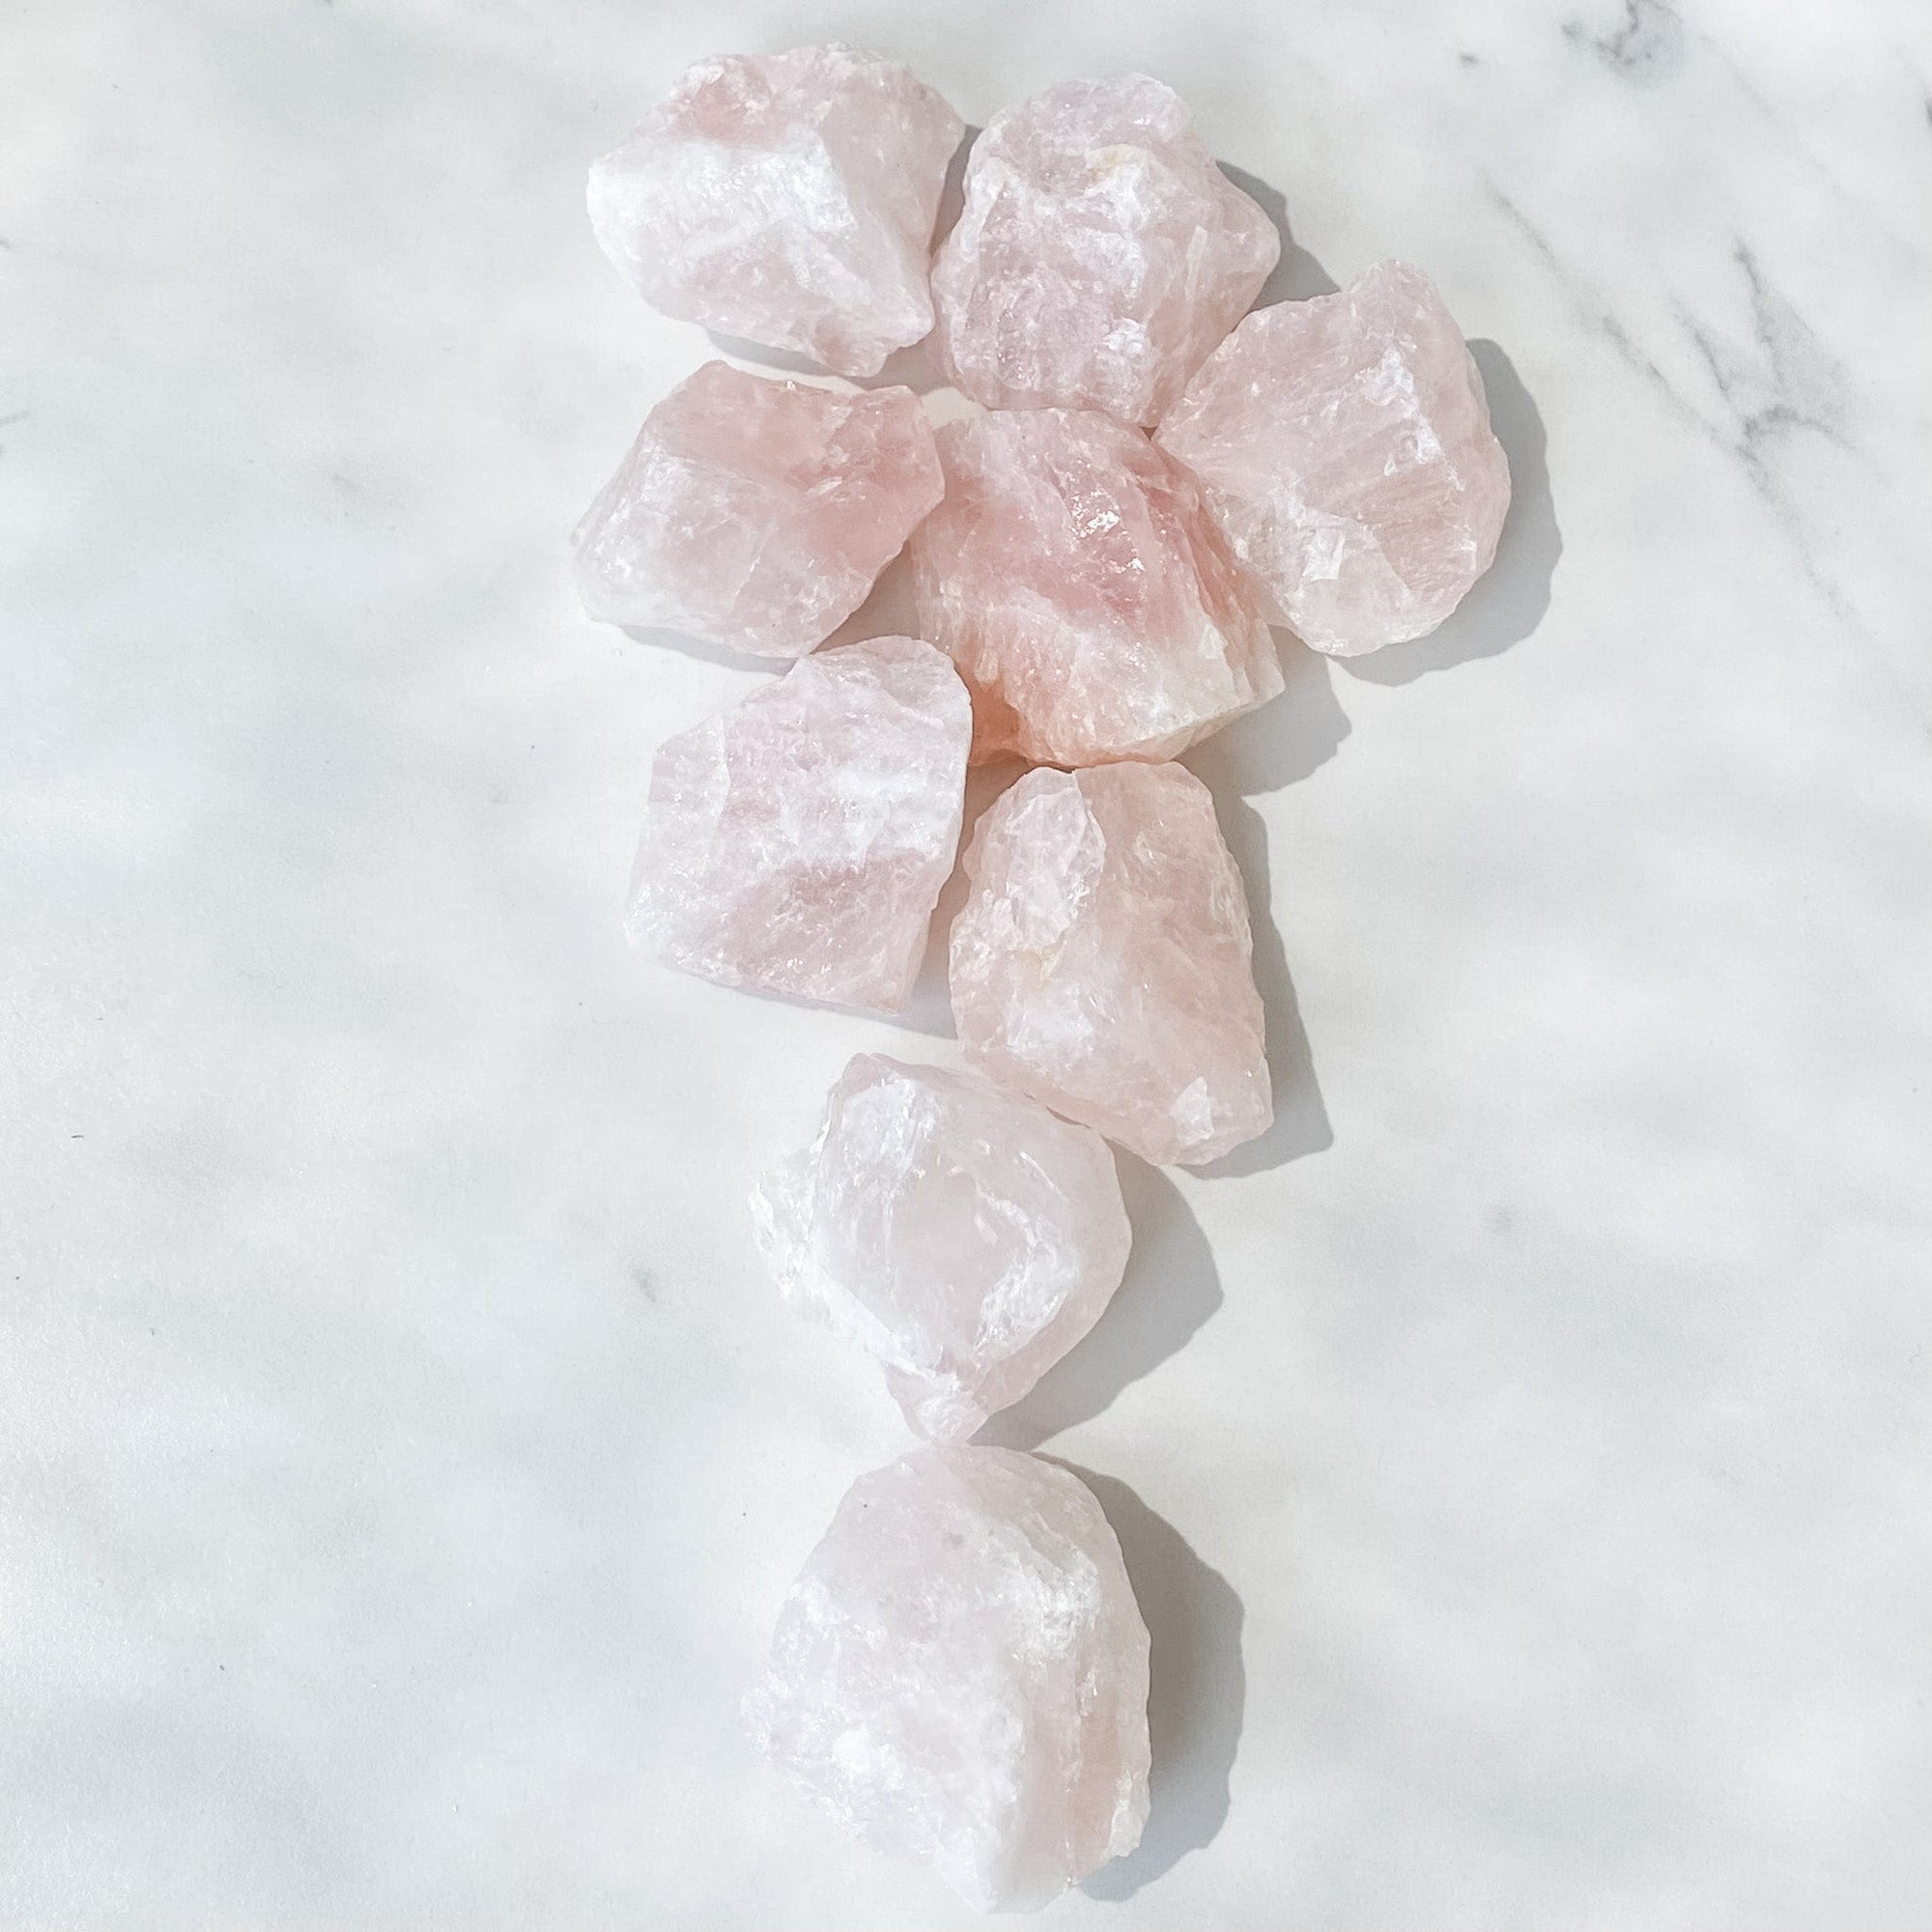 s1574 natural rose quartz crystal raw rough 5.5cm chunk stone australia. rose quartz raw stones australia. gemrox sydney 1